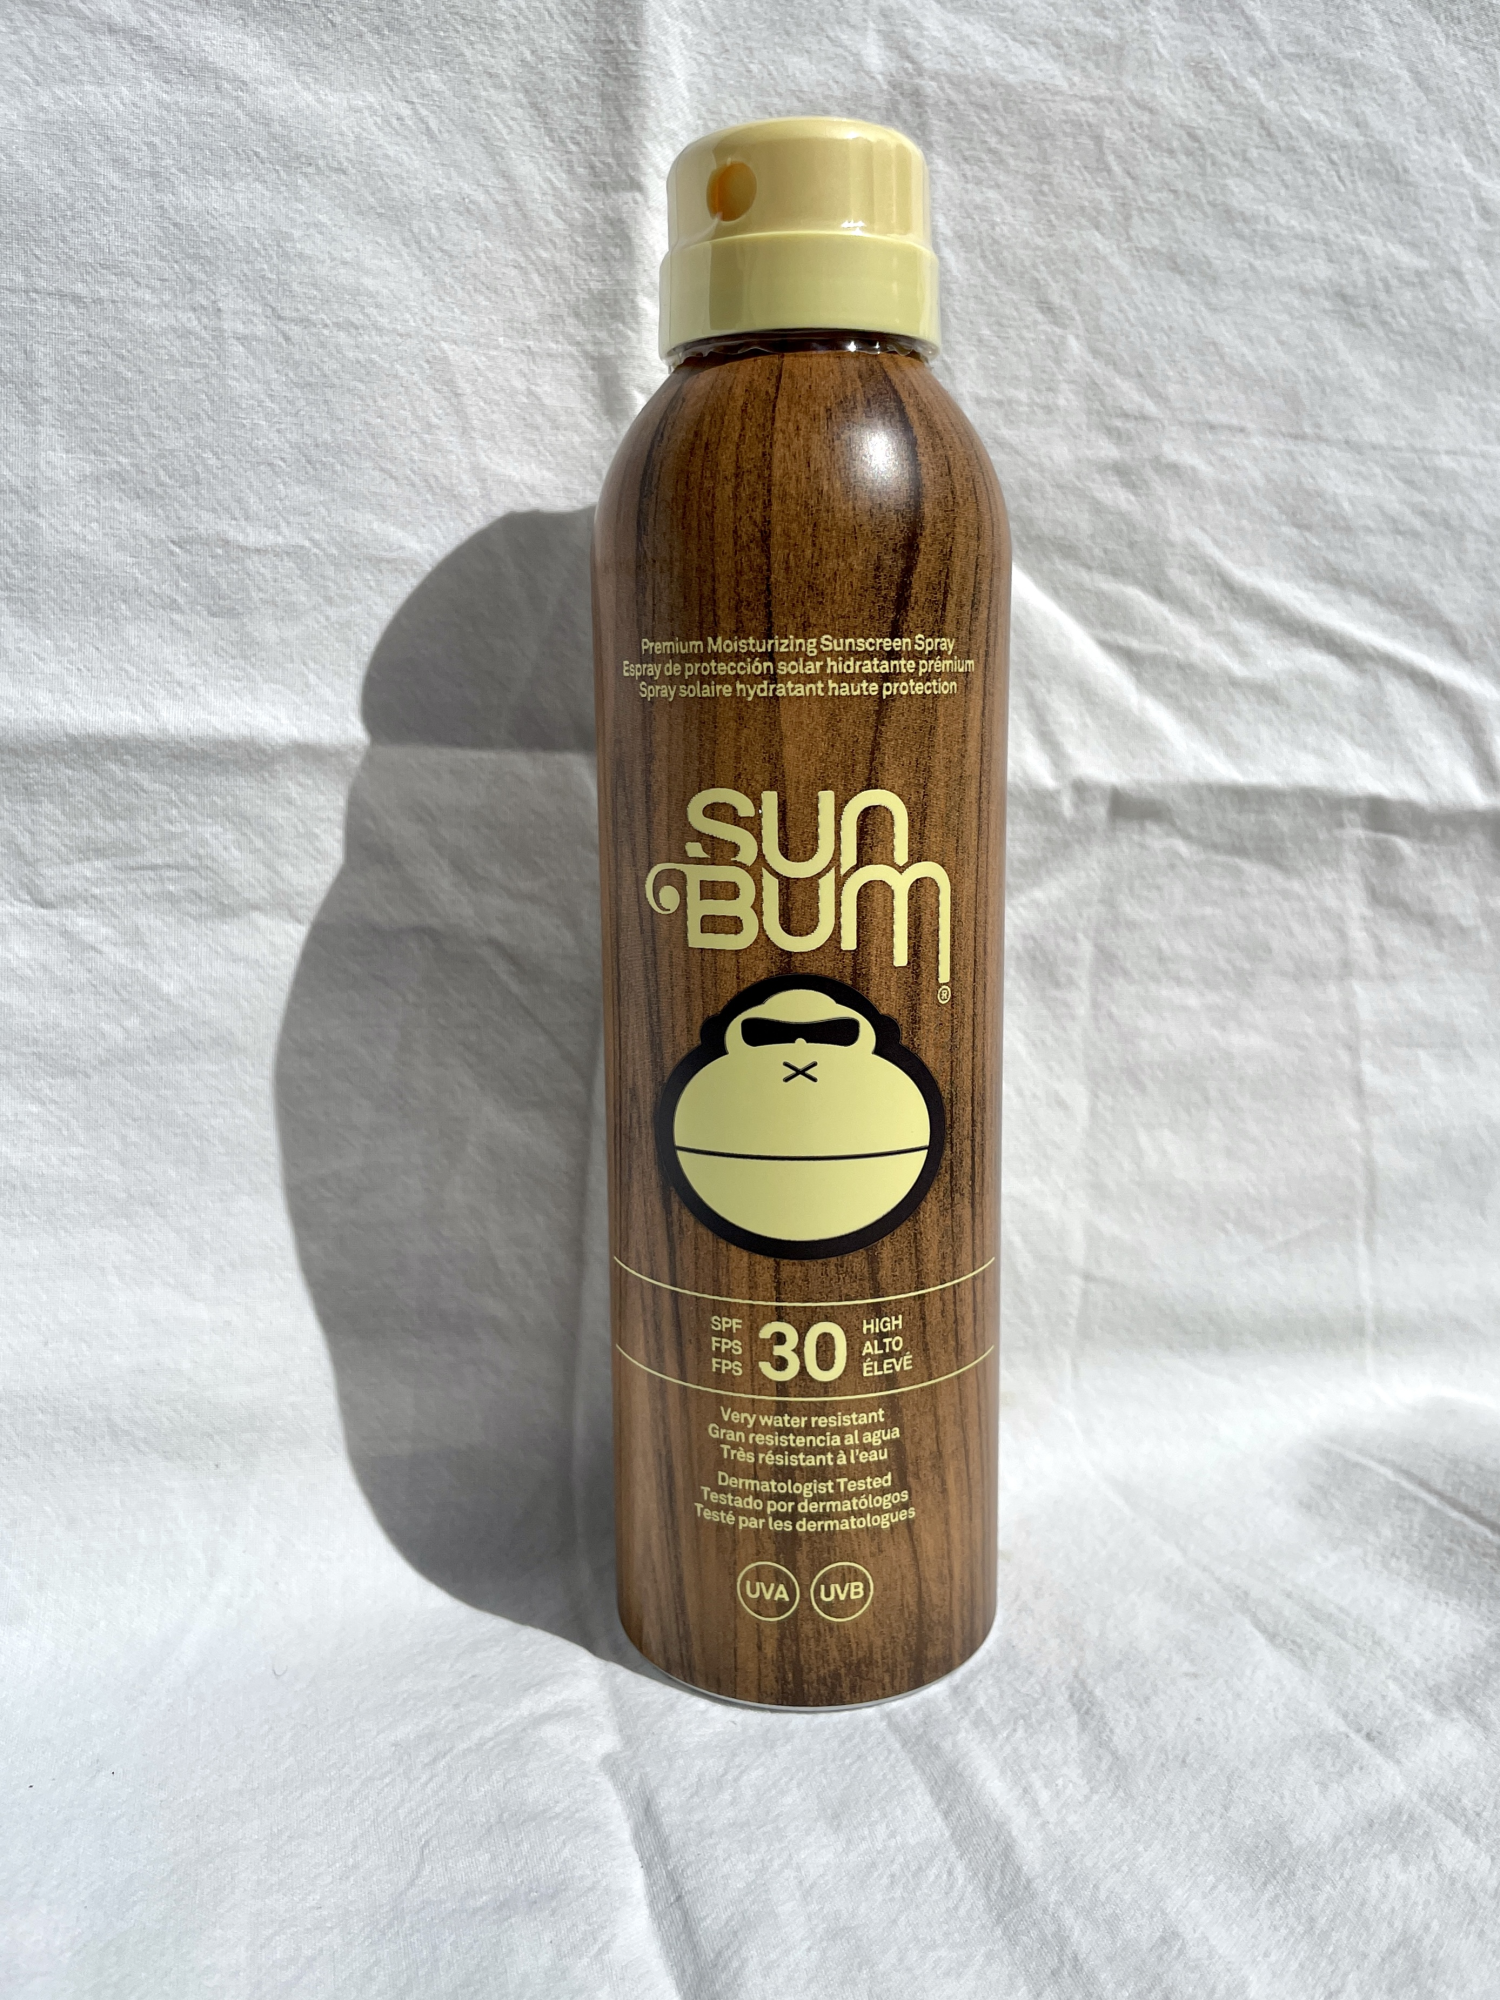 Premium Moisturizing Sunscreen Spray, SPF30